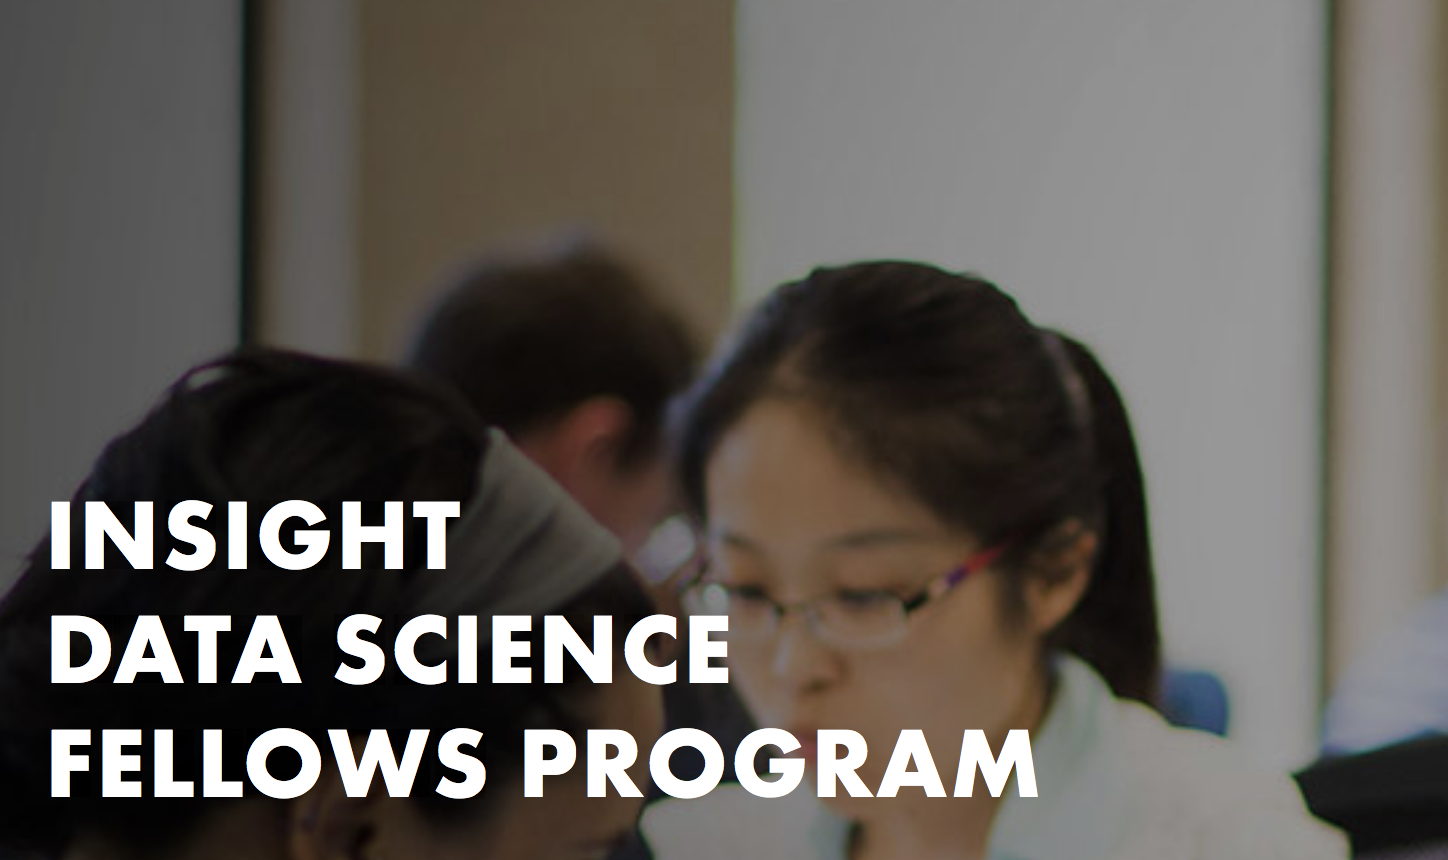 The Insight Data Fellows Program